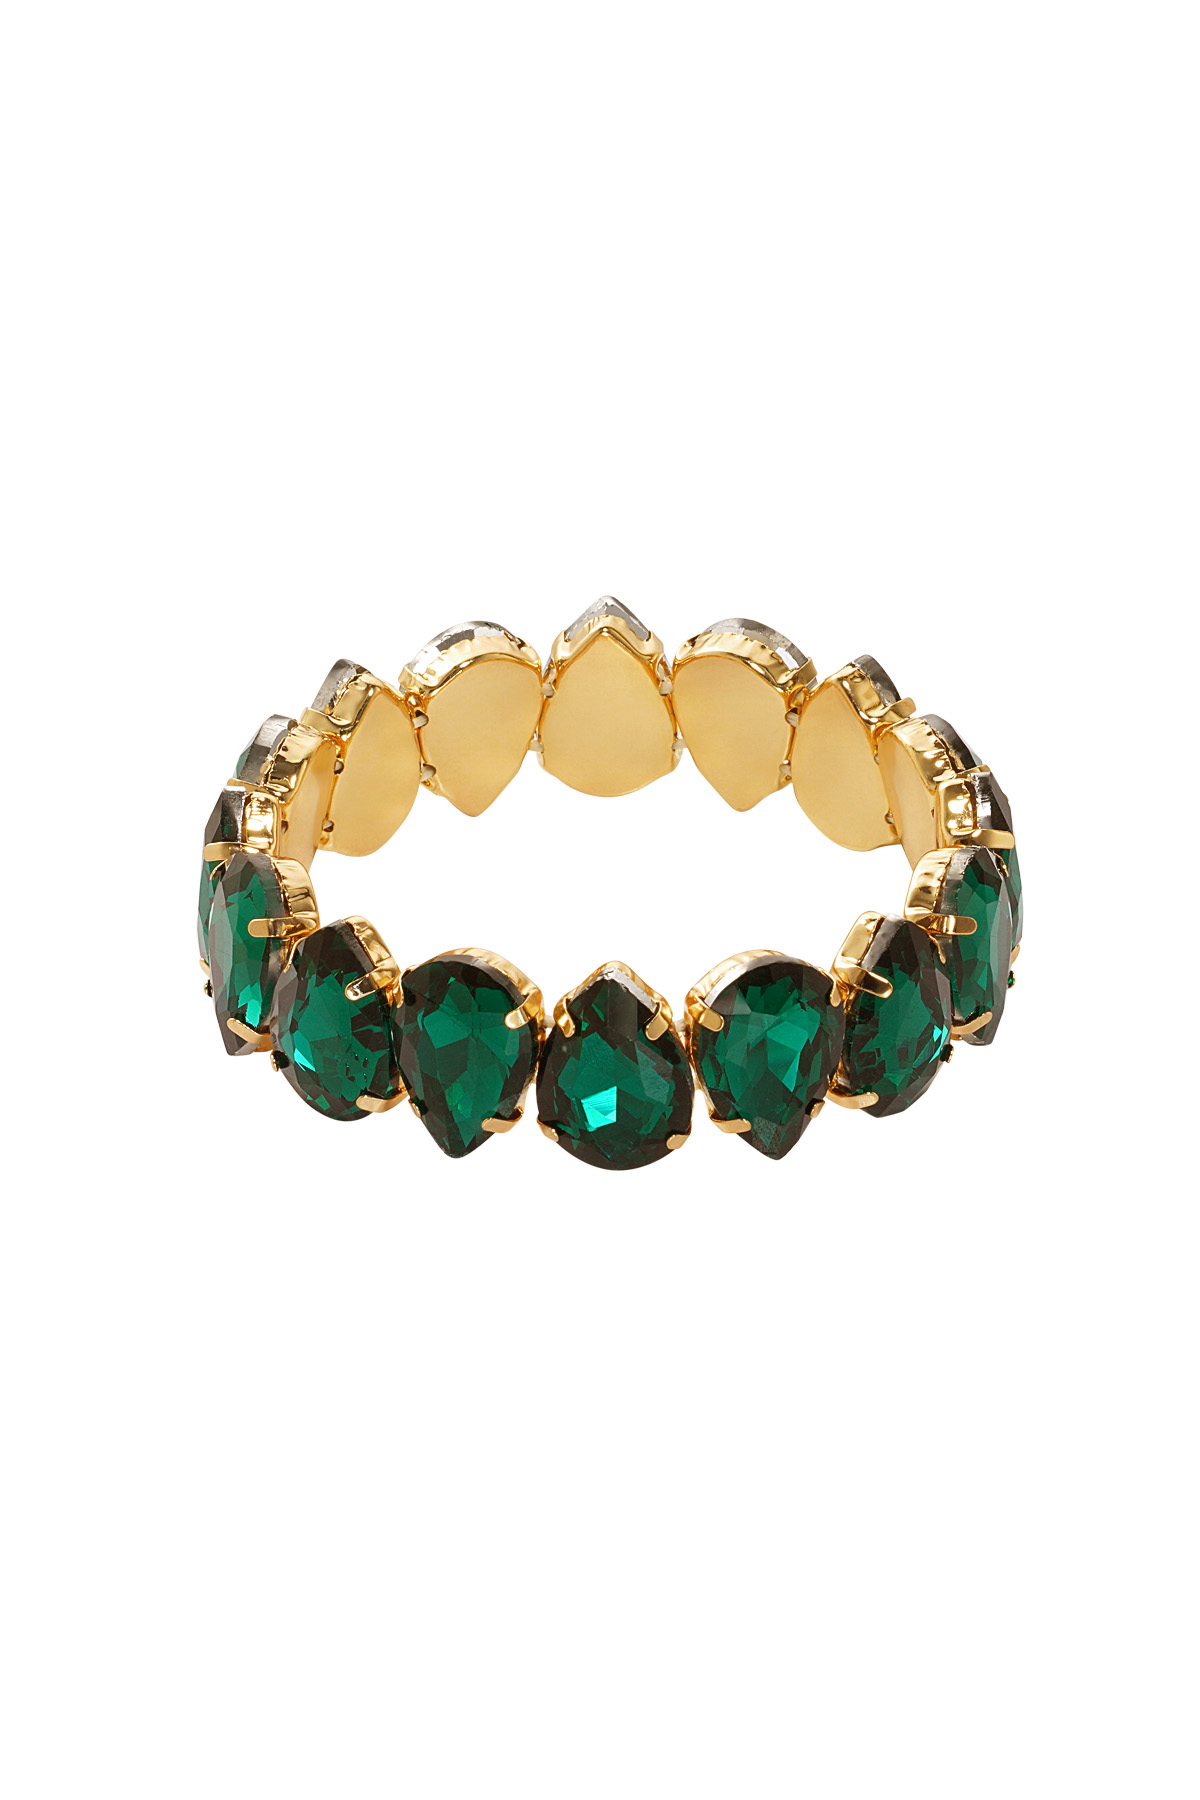 Bracelet glass beads - green h5 